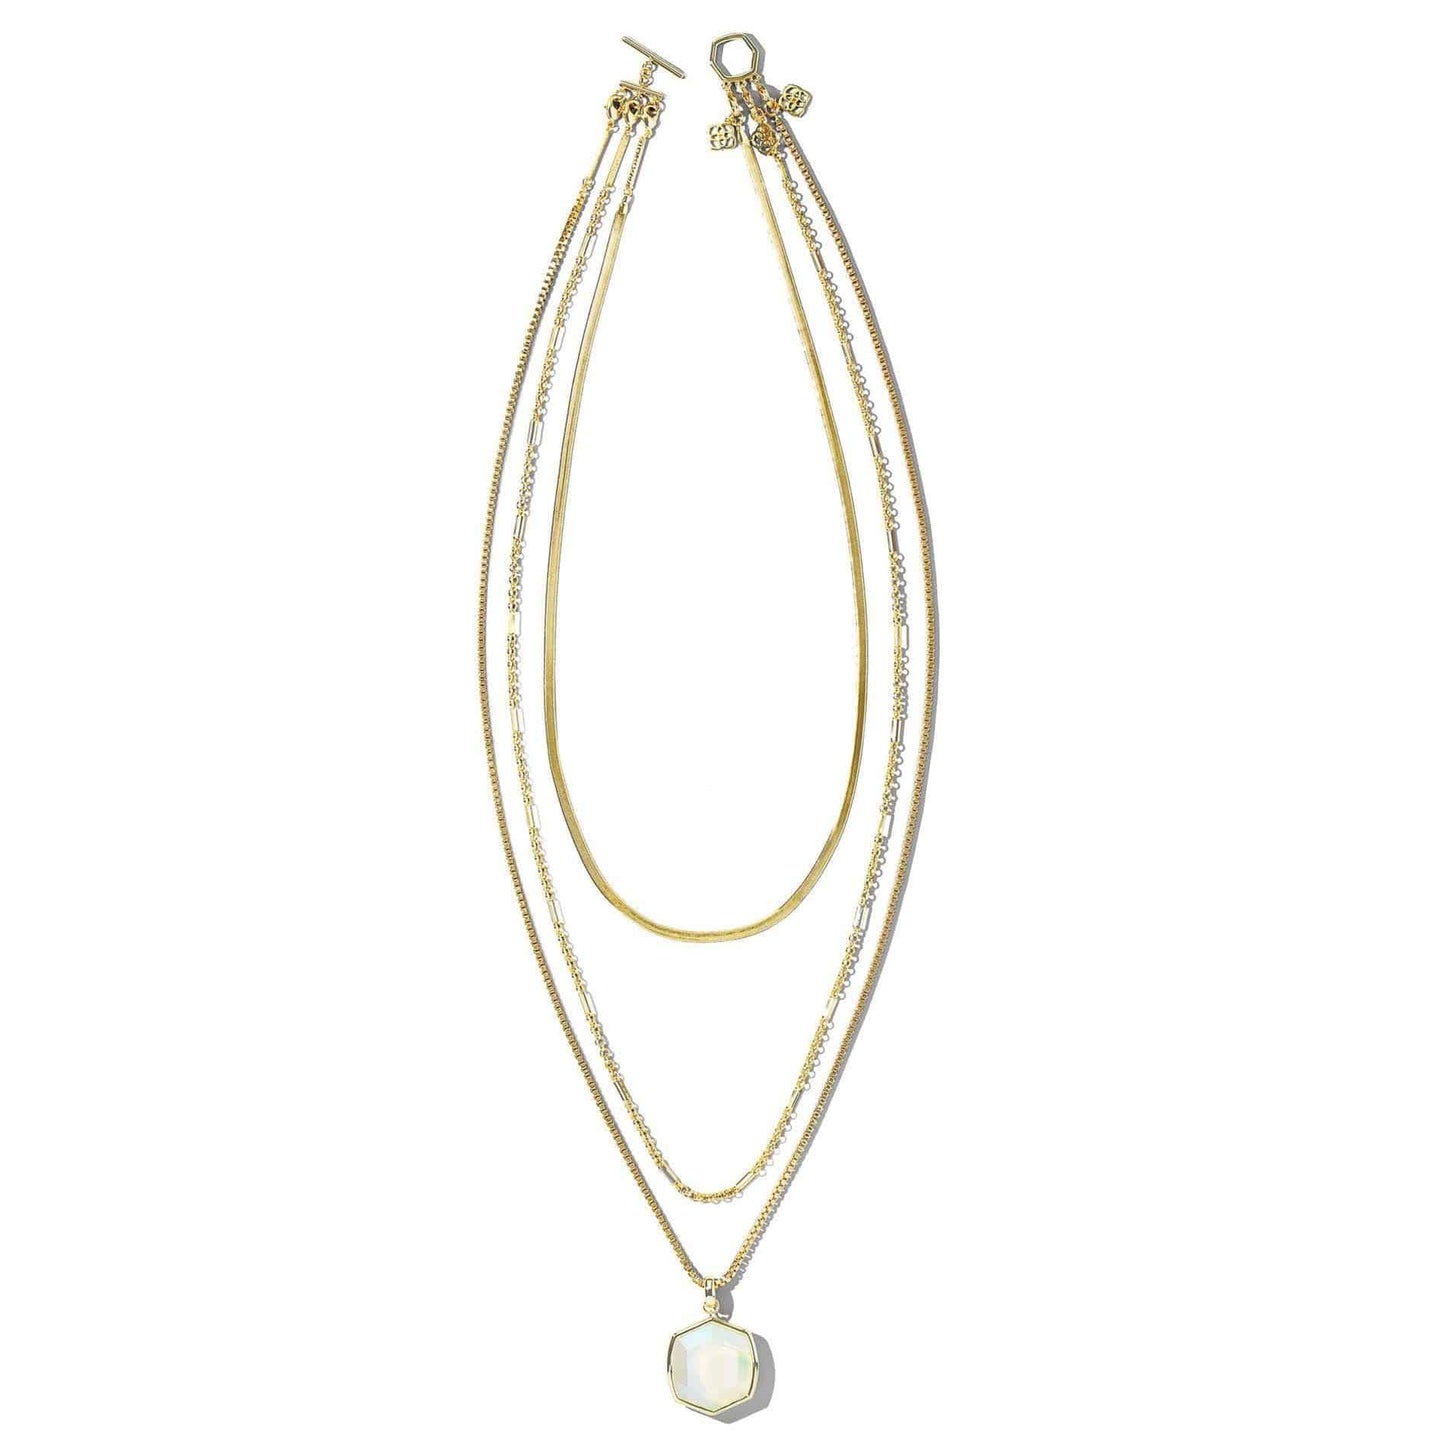 Kendra Scott - Davis Chain Triple Strand Necklace in Iridescent Opalite Glass - Findlay Rowe Designs